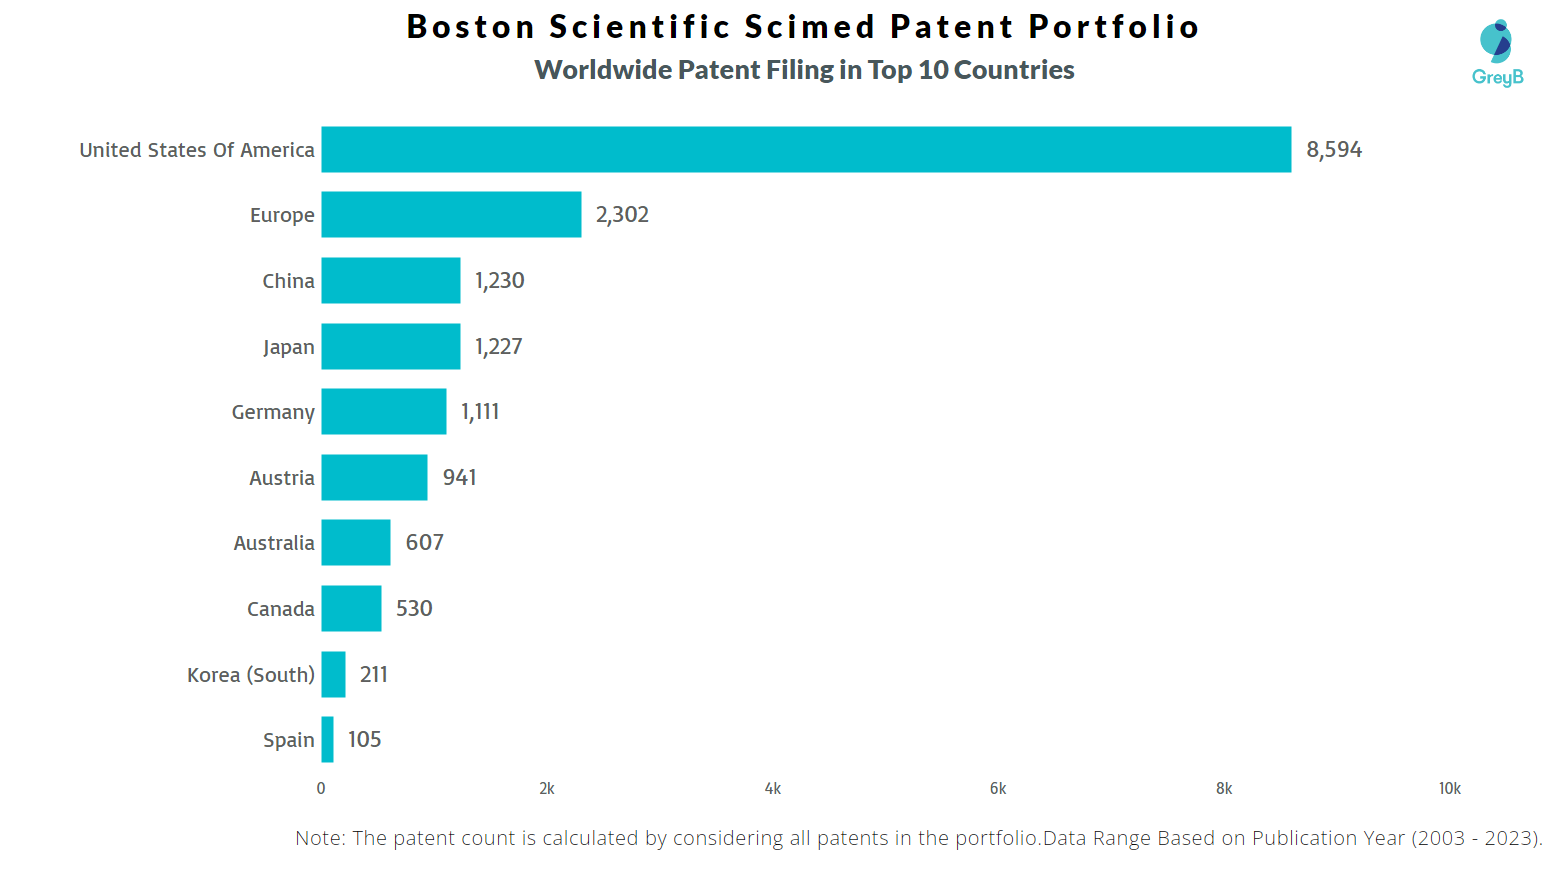 Boston Scientific Scimed Worldwide Patent Filing